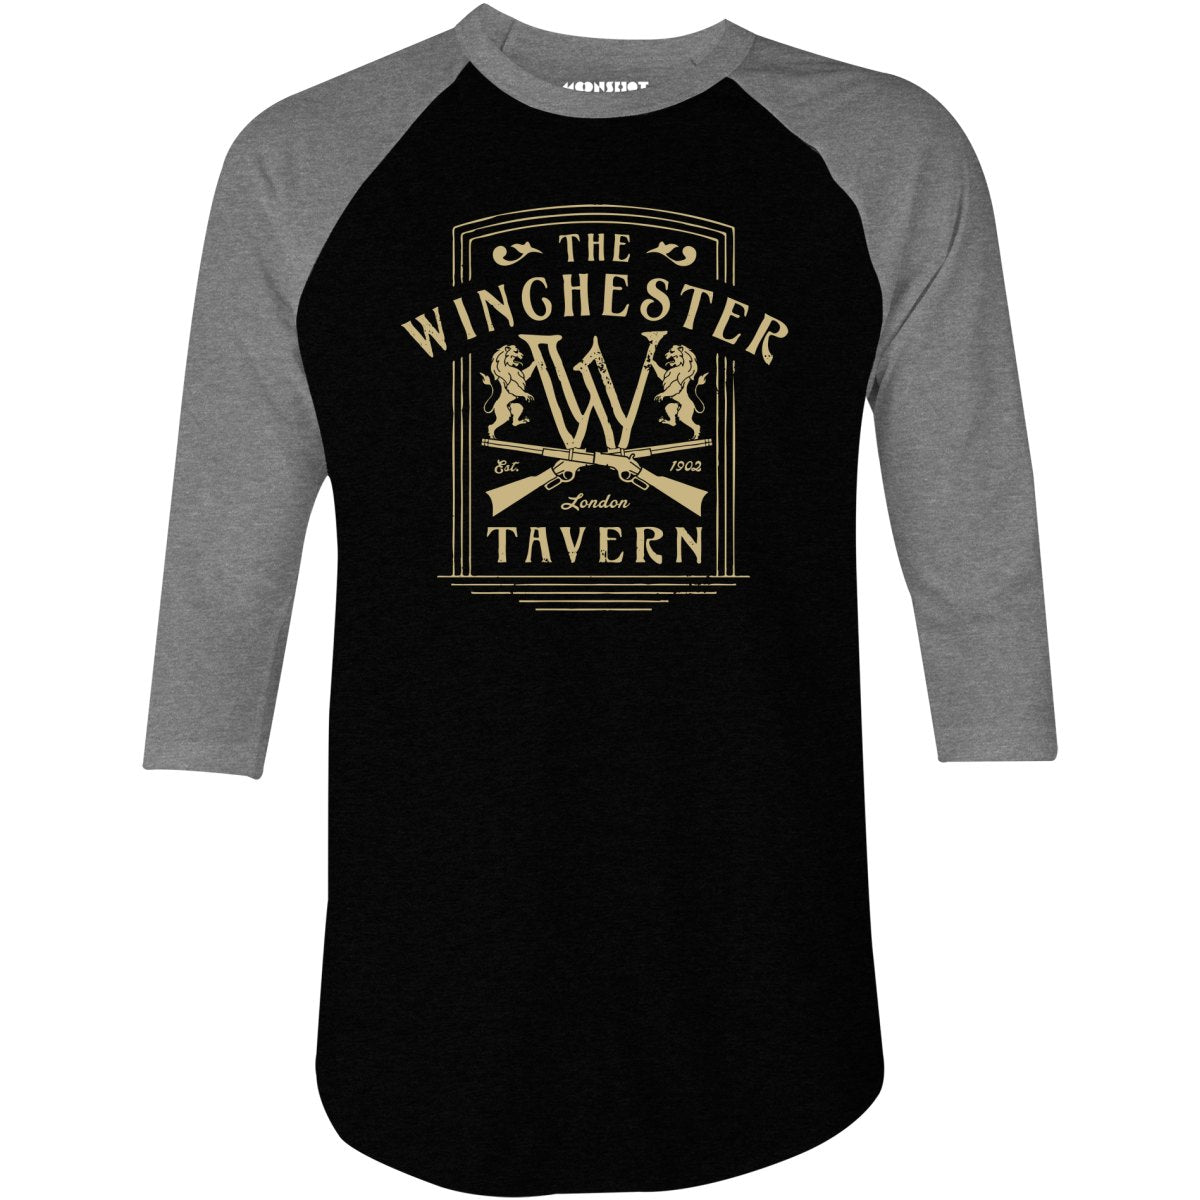 The Winchester Tavern - Shaun of the Dead - 3/4 Sleeve Raglan T-Shirt